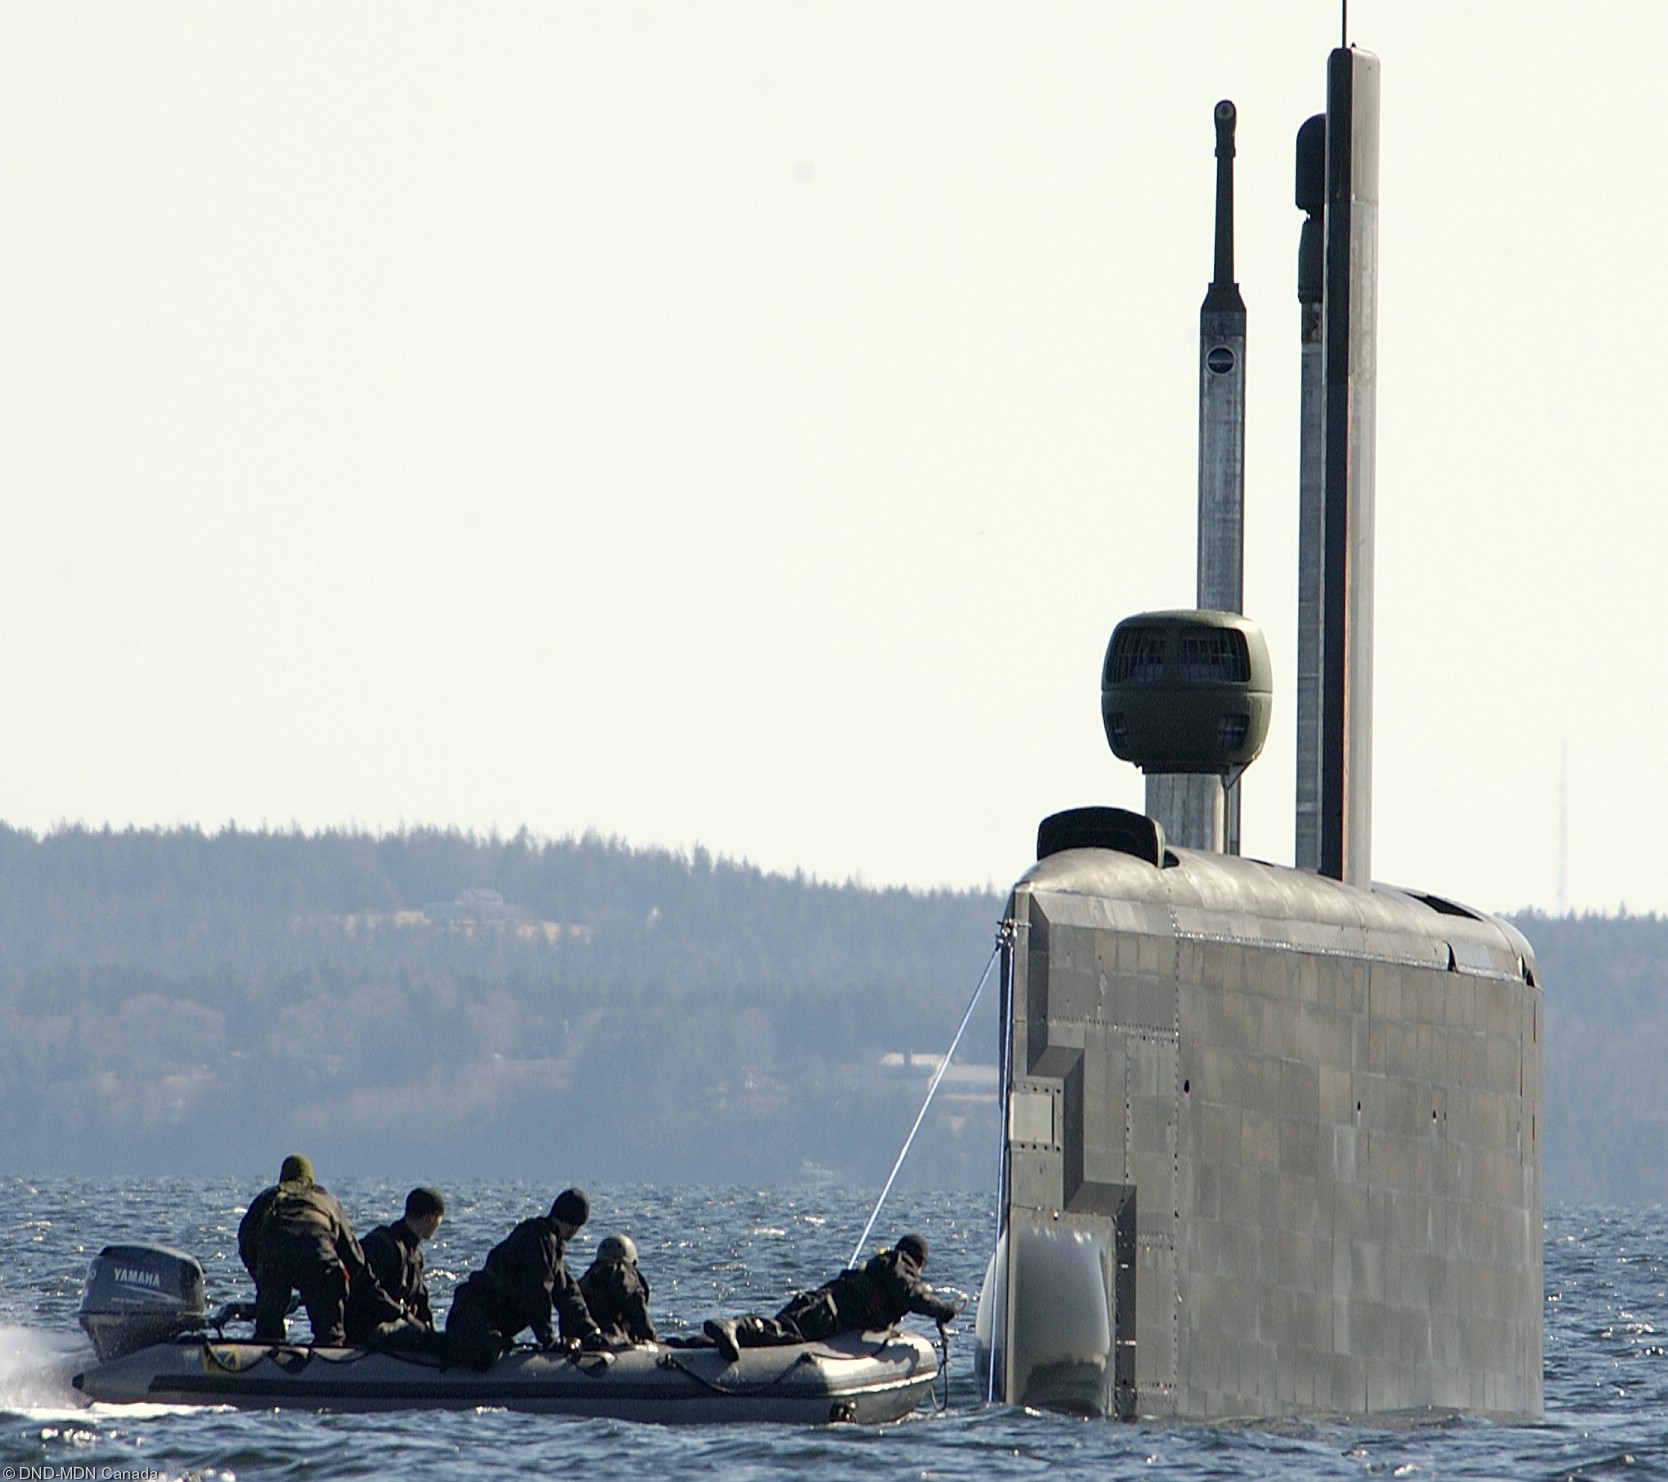 ssk-877 hmcs windsor victoria upholder class attack submarine hunter killer ncsm royal canadian navy 08